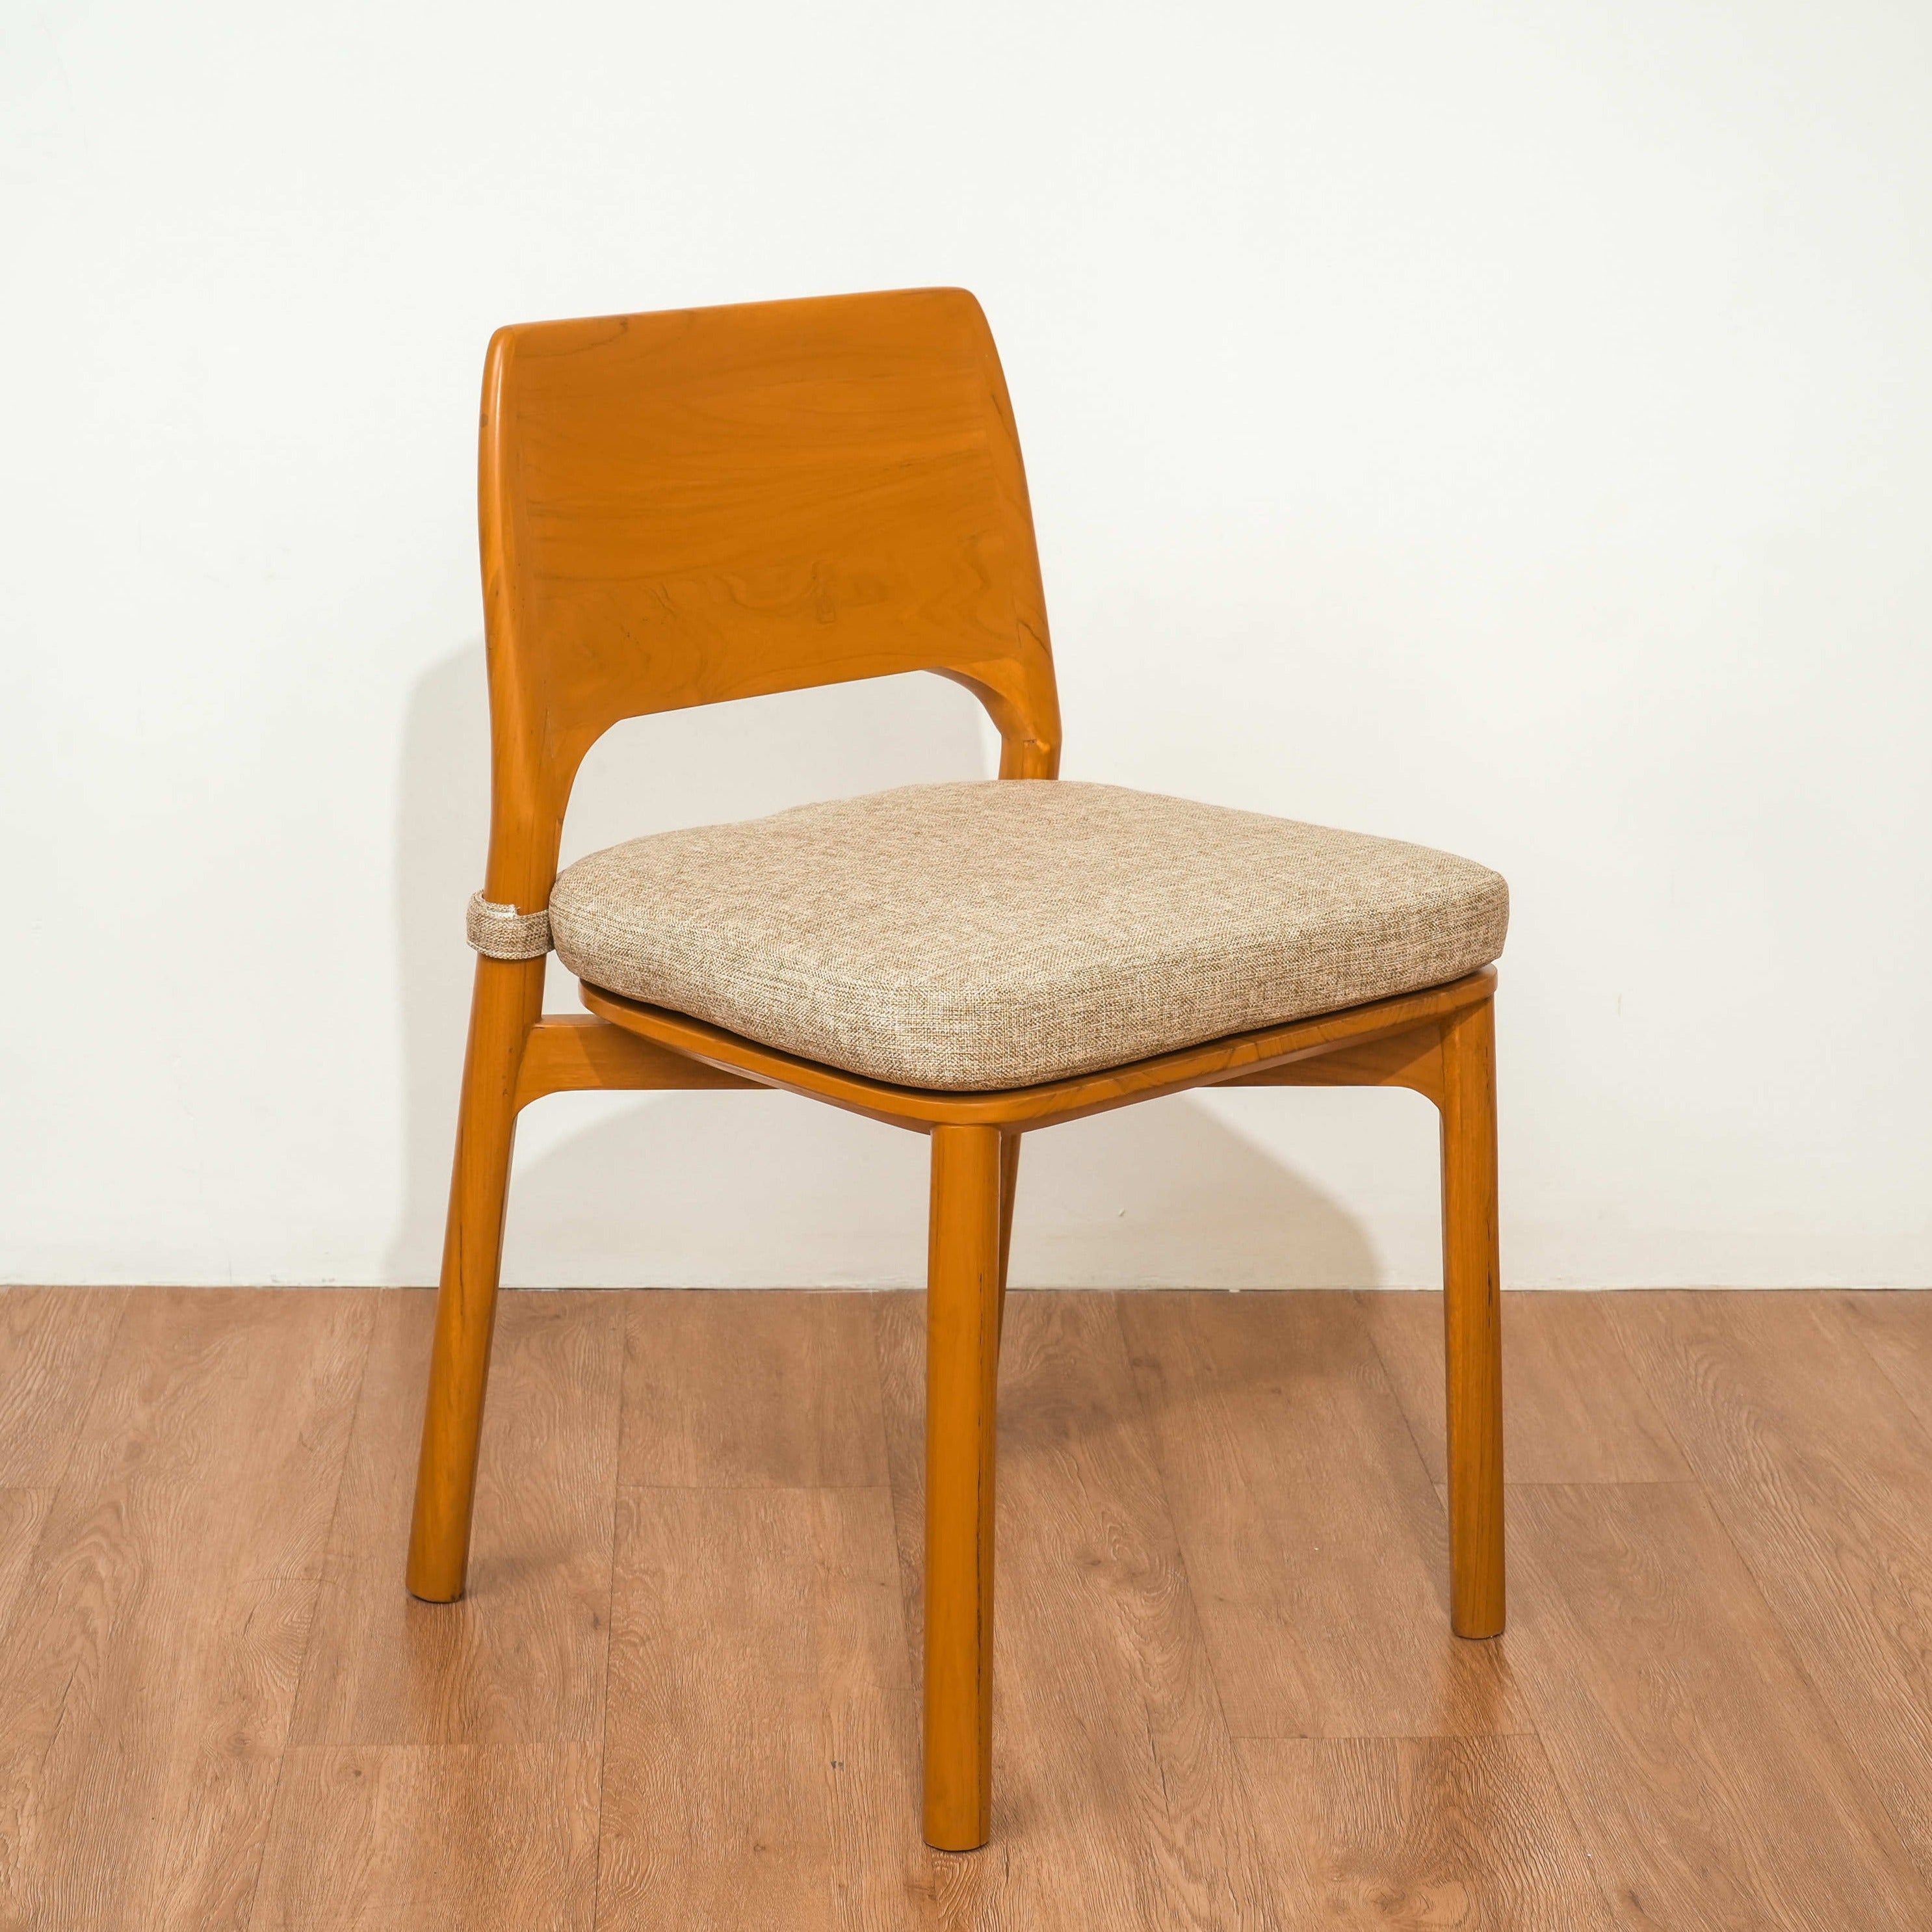 Kursi Minimalis dengan Premium Cushion Chair Lagom Home Store Jati Furnitur Teak Furniture Jakarta